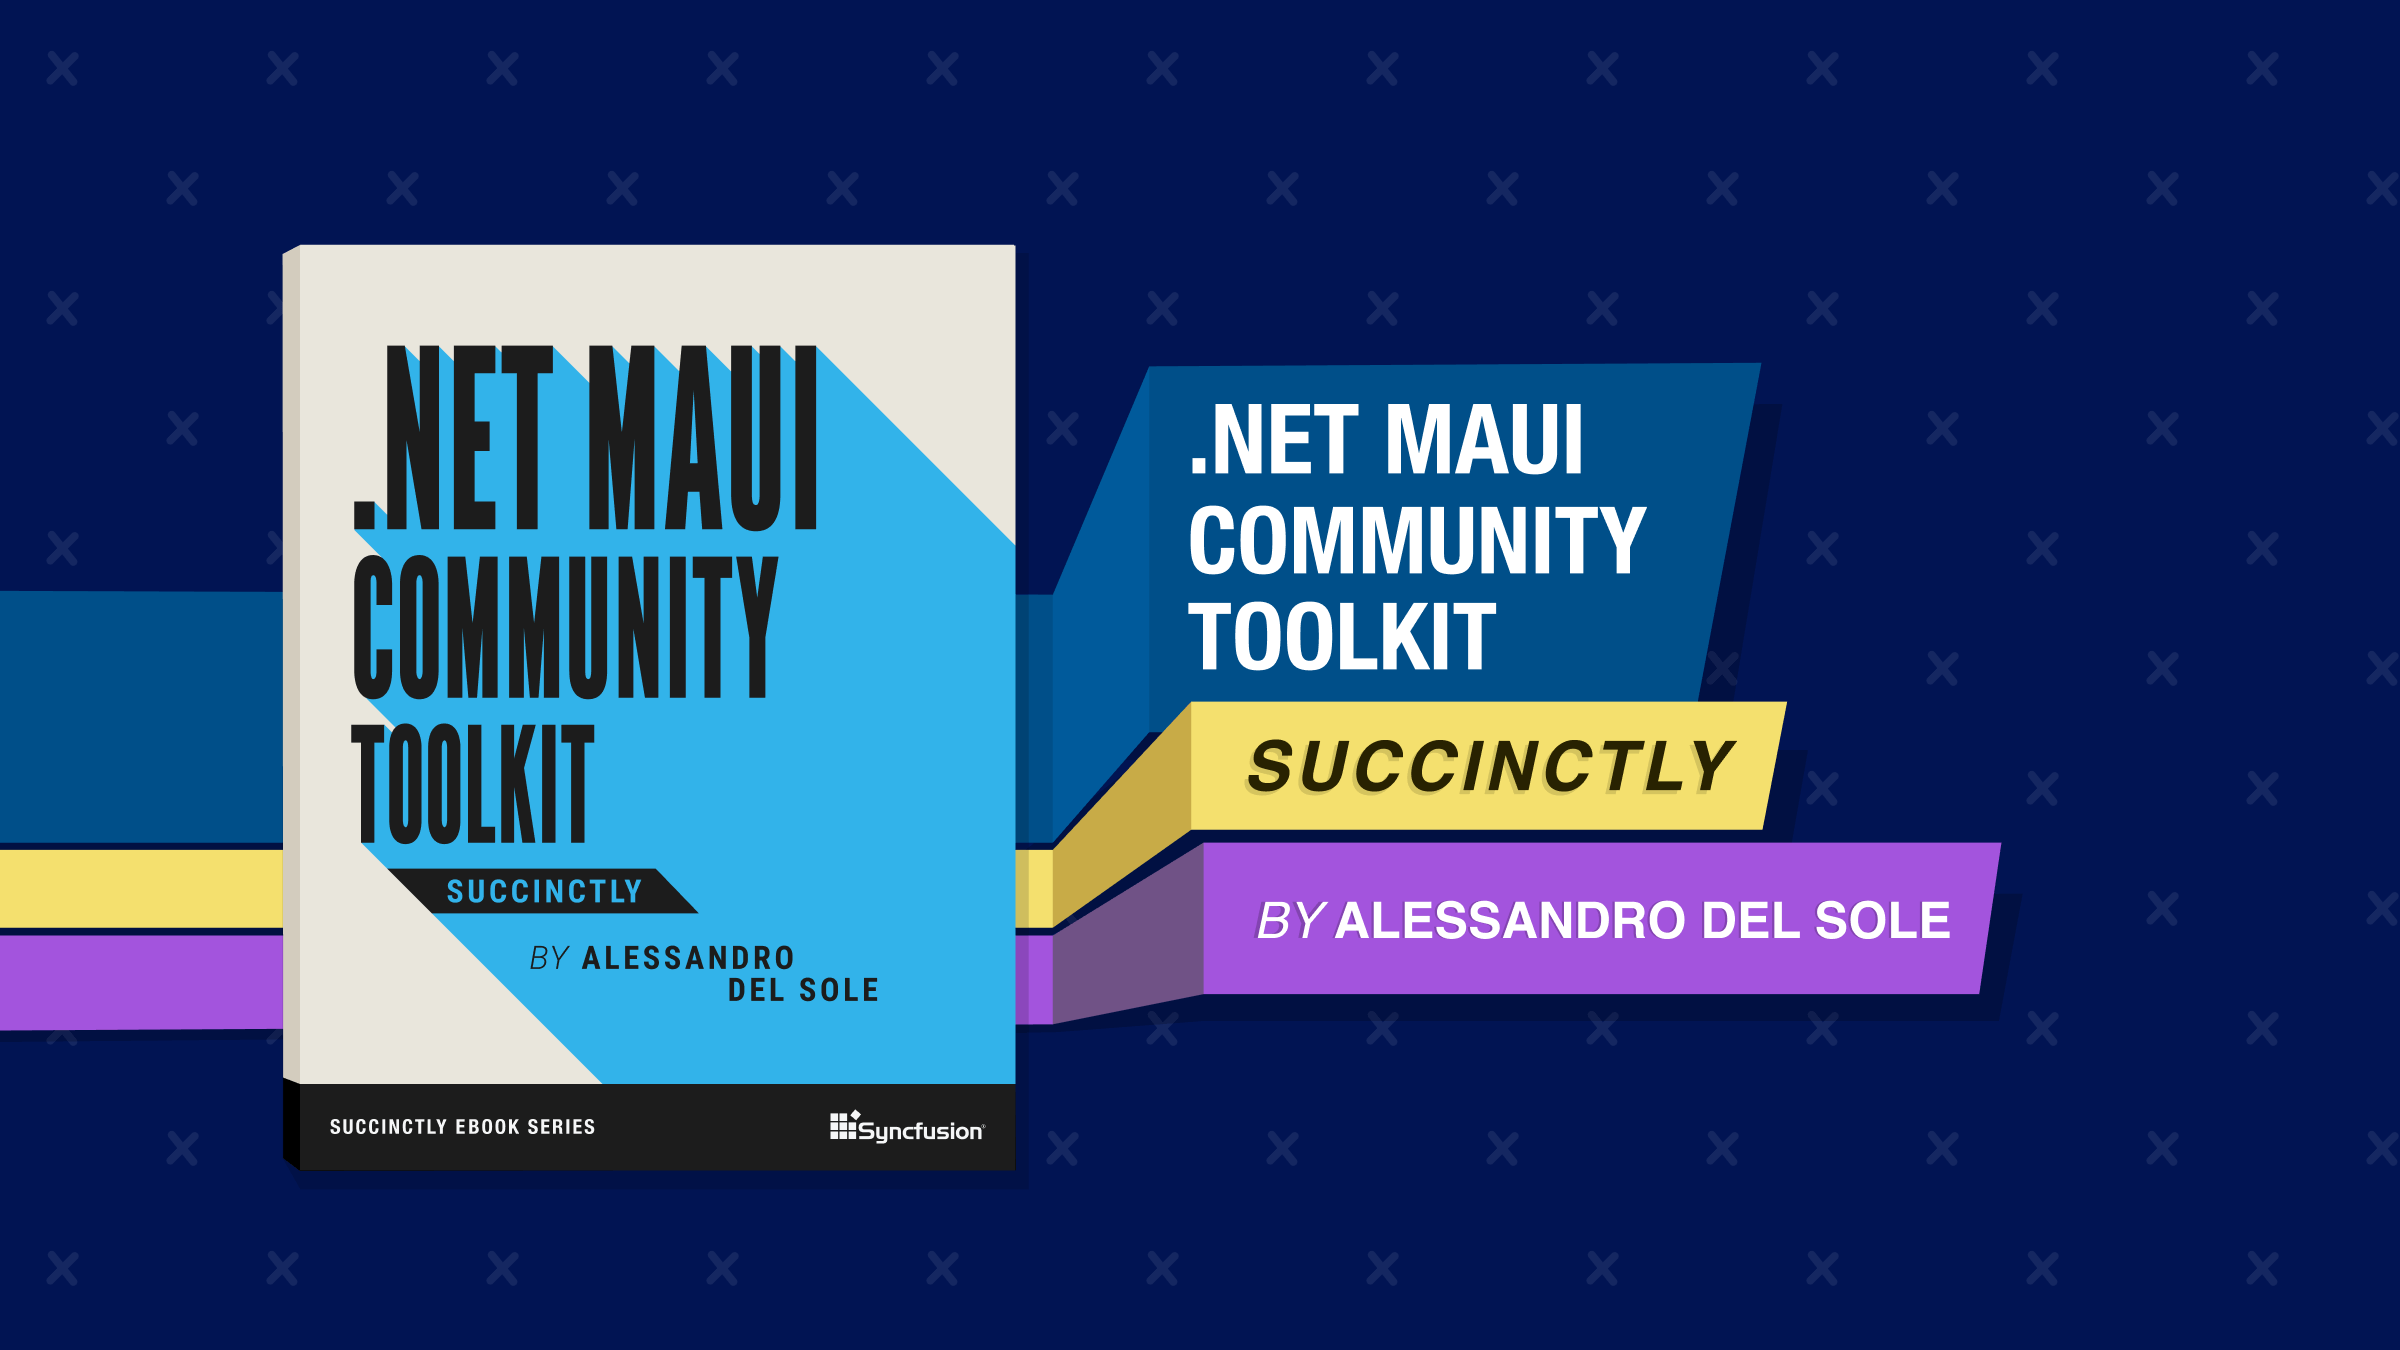 Snackbar – .NET MAUI Community Toolkit - Community Toolkits for